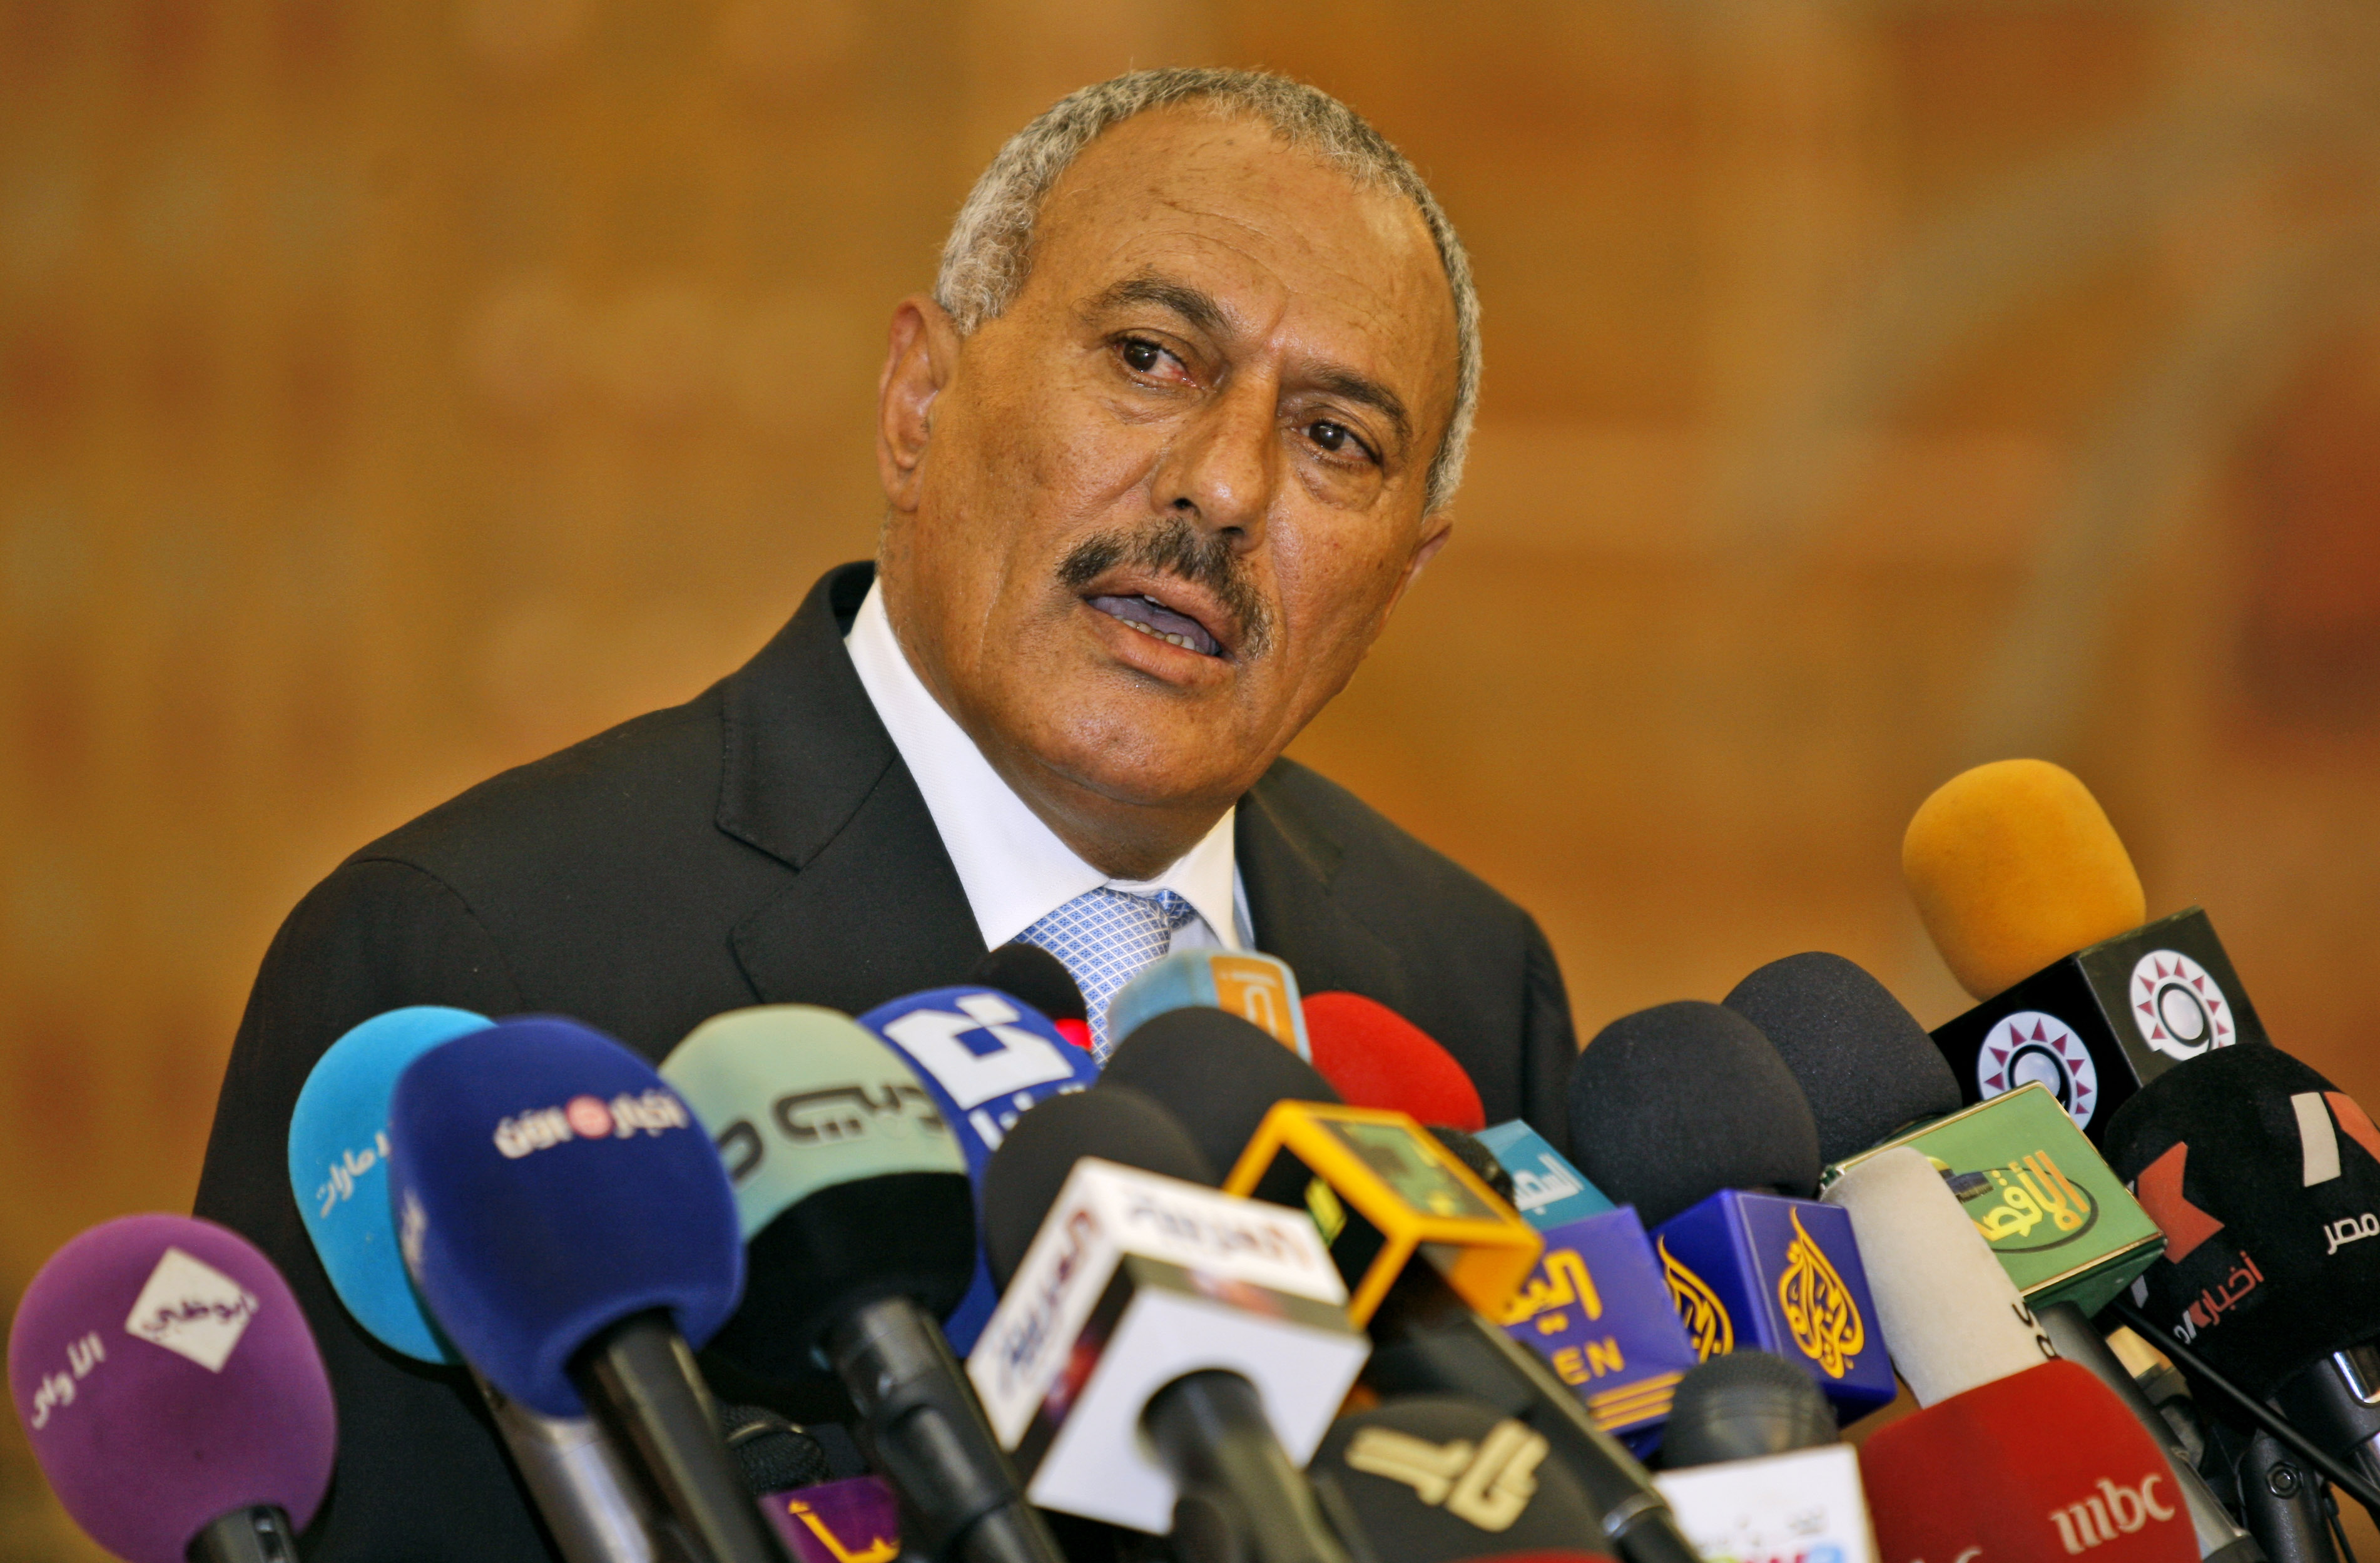 Demokrati, Jemen, Reform, Sanaa, Demonstration, Uppror, Ali Abdullah Saleh, Revolution, Demonstranter